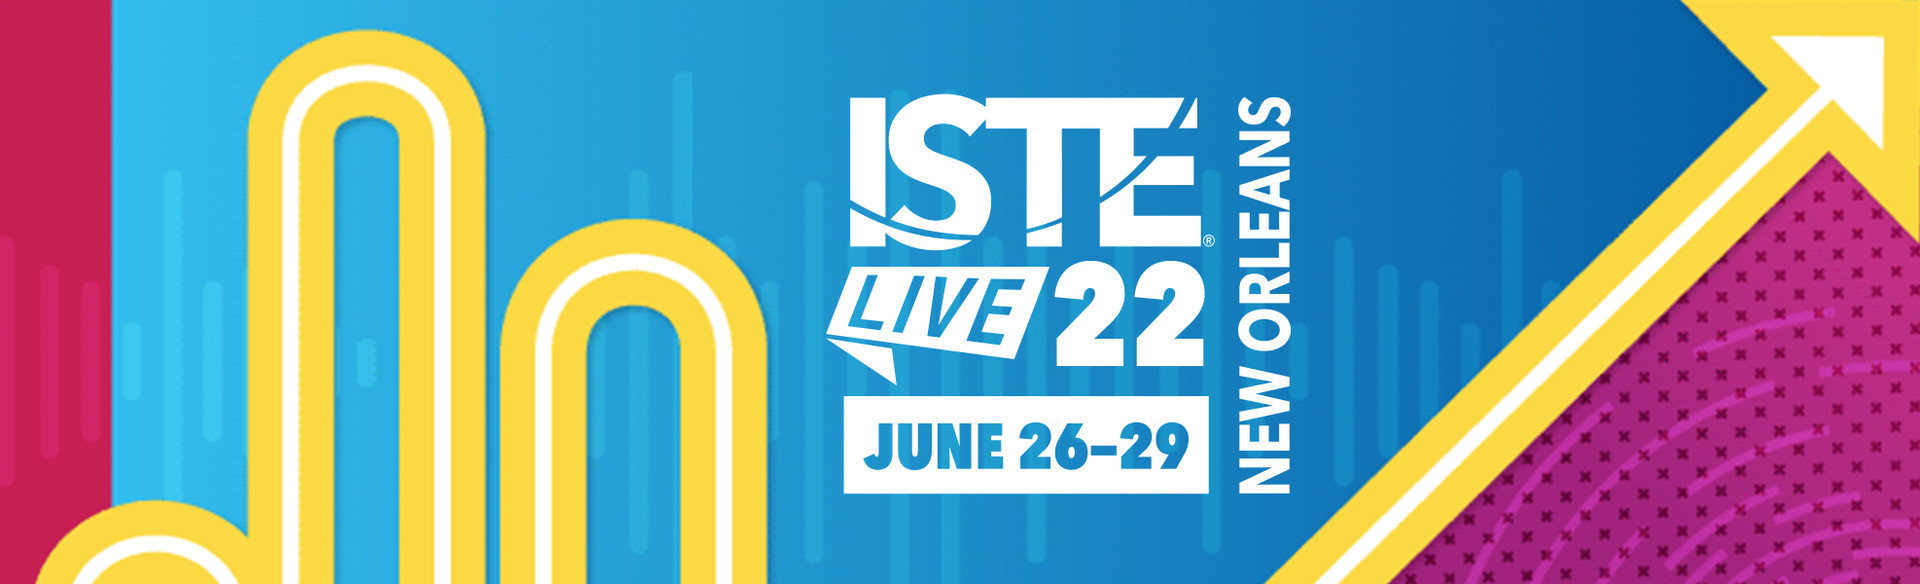 ISTE Live 22